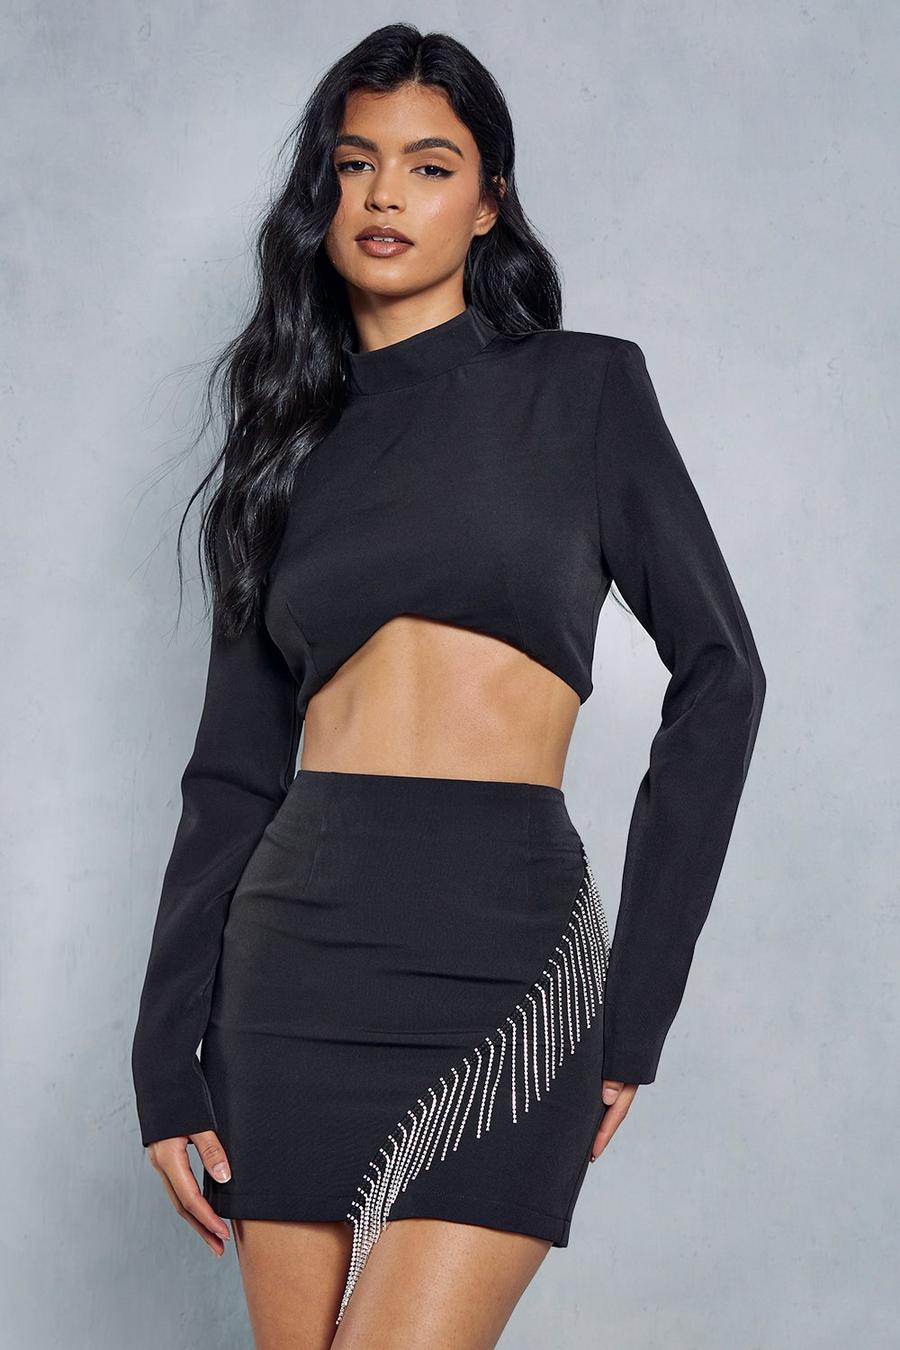 Black Shaped Bust Long Sleeve Top & Diamante Trim Skirt Co-ord